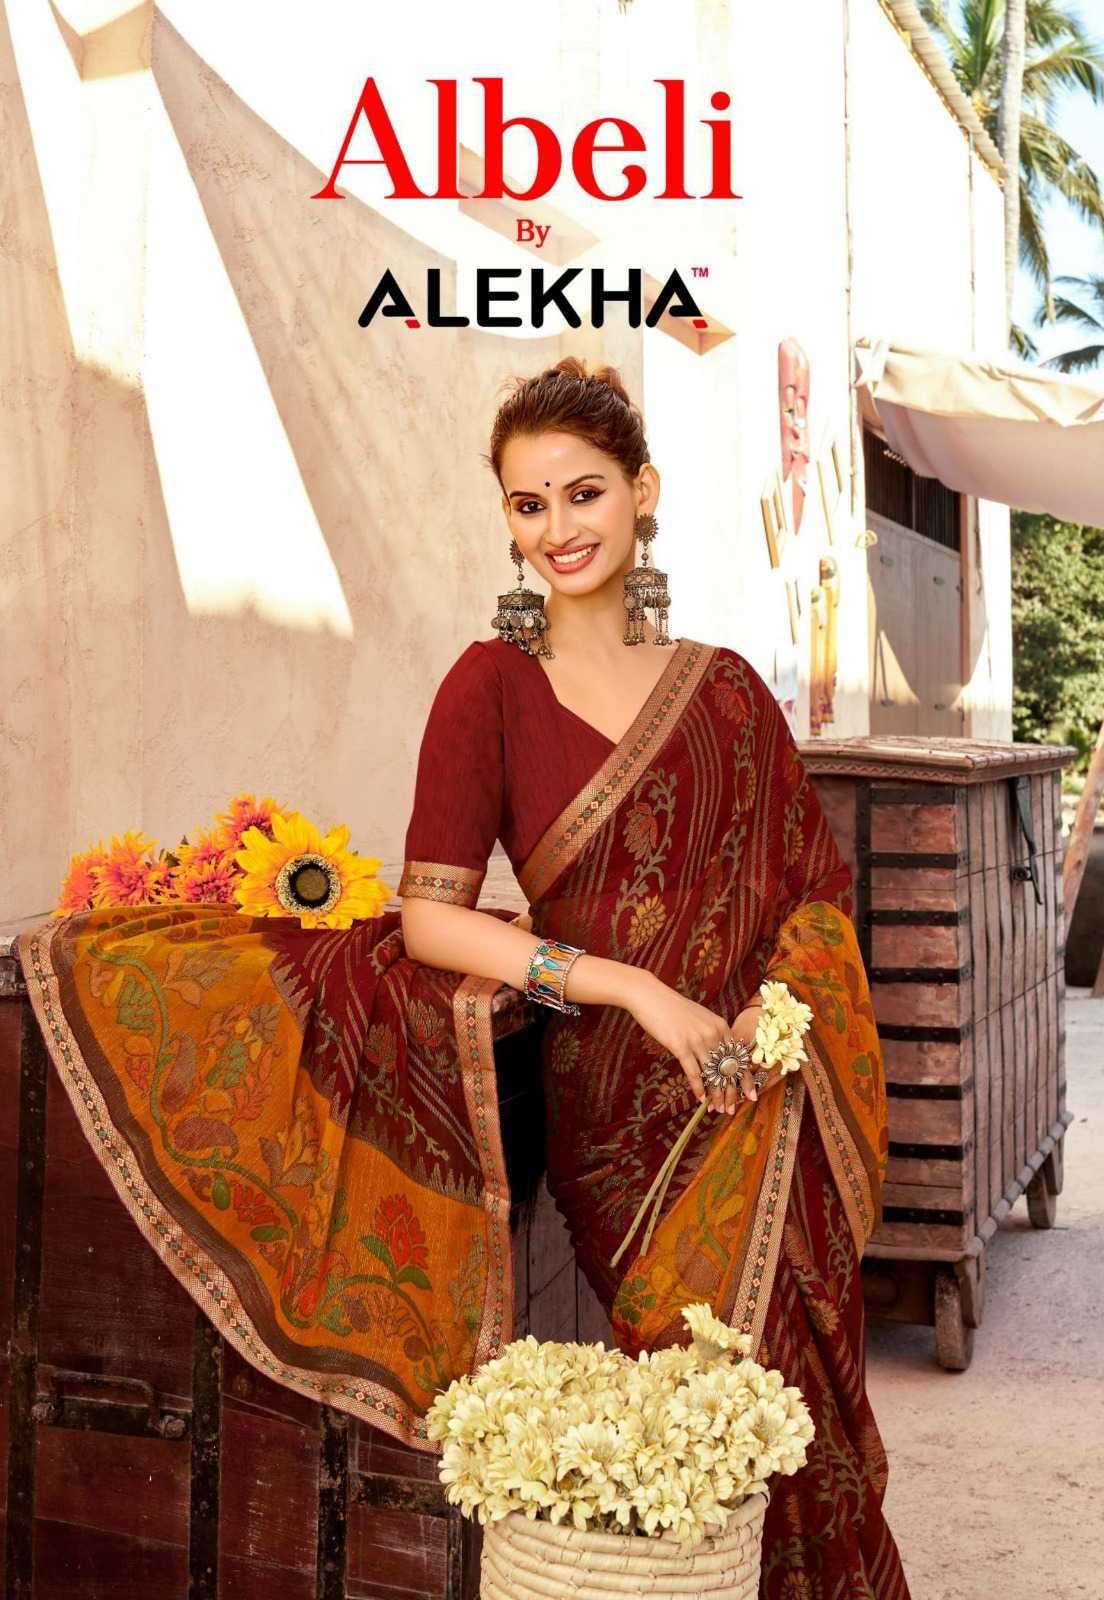 alekha albeli series 27501-27508 fancy saree